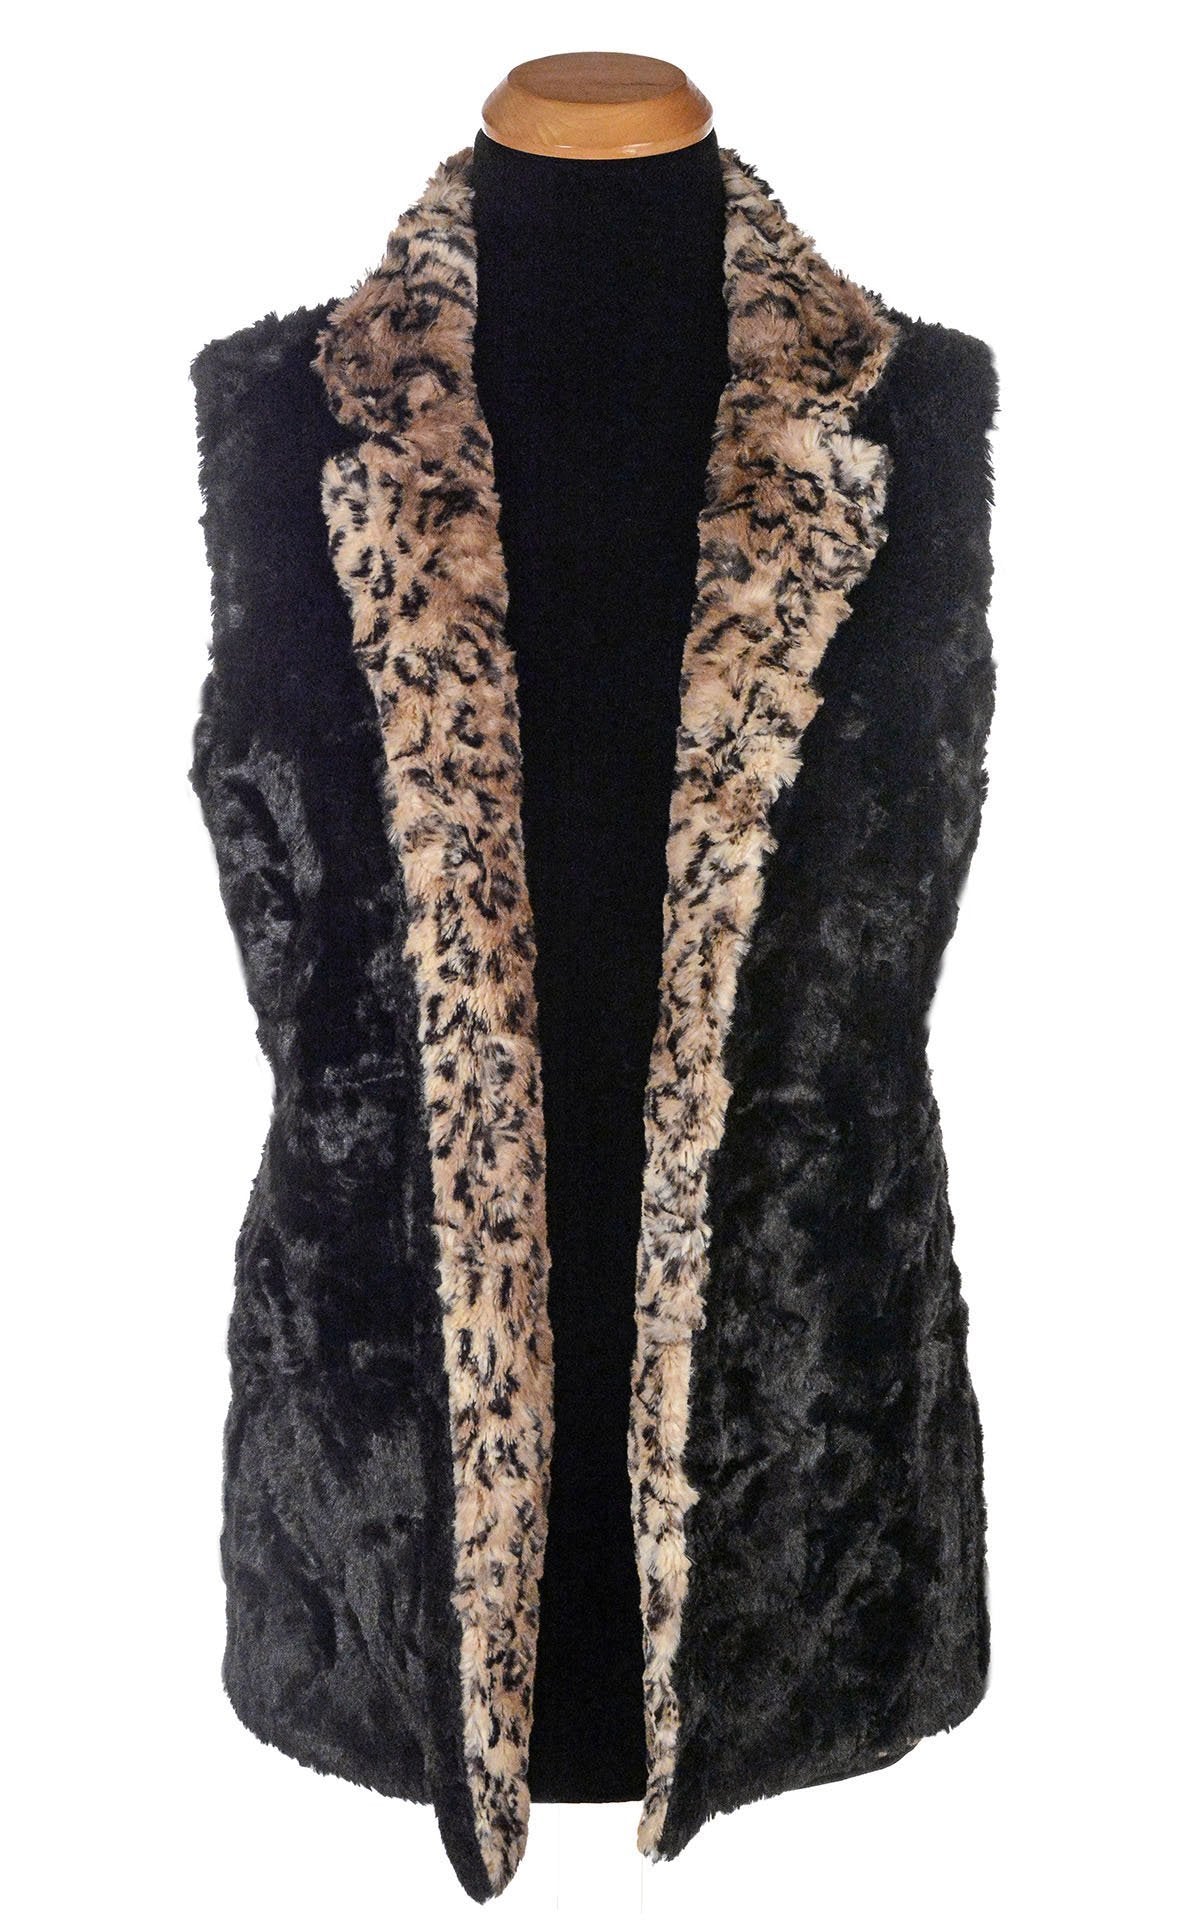 Mandarin Vest Short | Carpathian Lynx Brown, Tan, and Black Animal Print and Cuddly Black Faux Fur | Reversible | Handmade in Seattle WA | Pandemonium Millinery